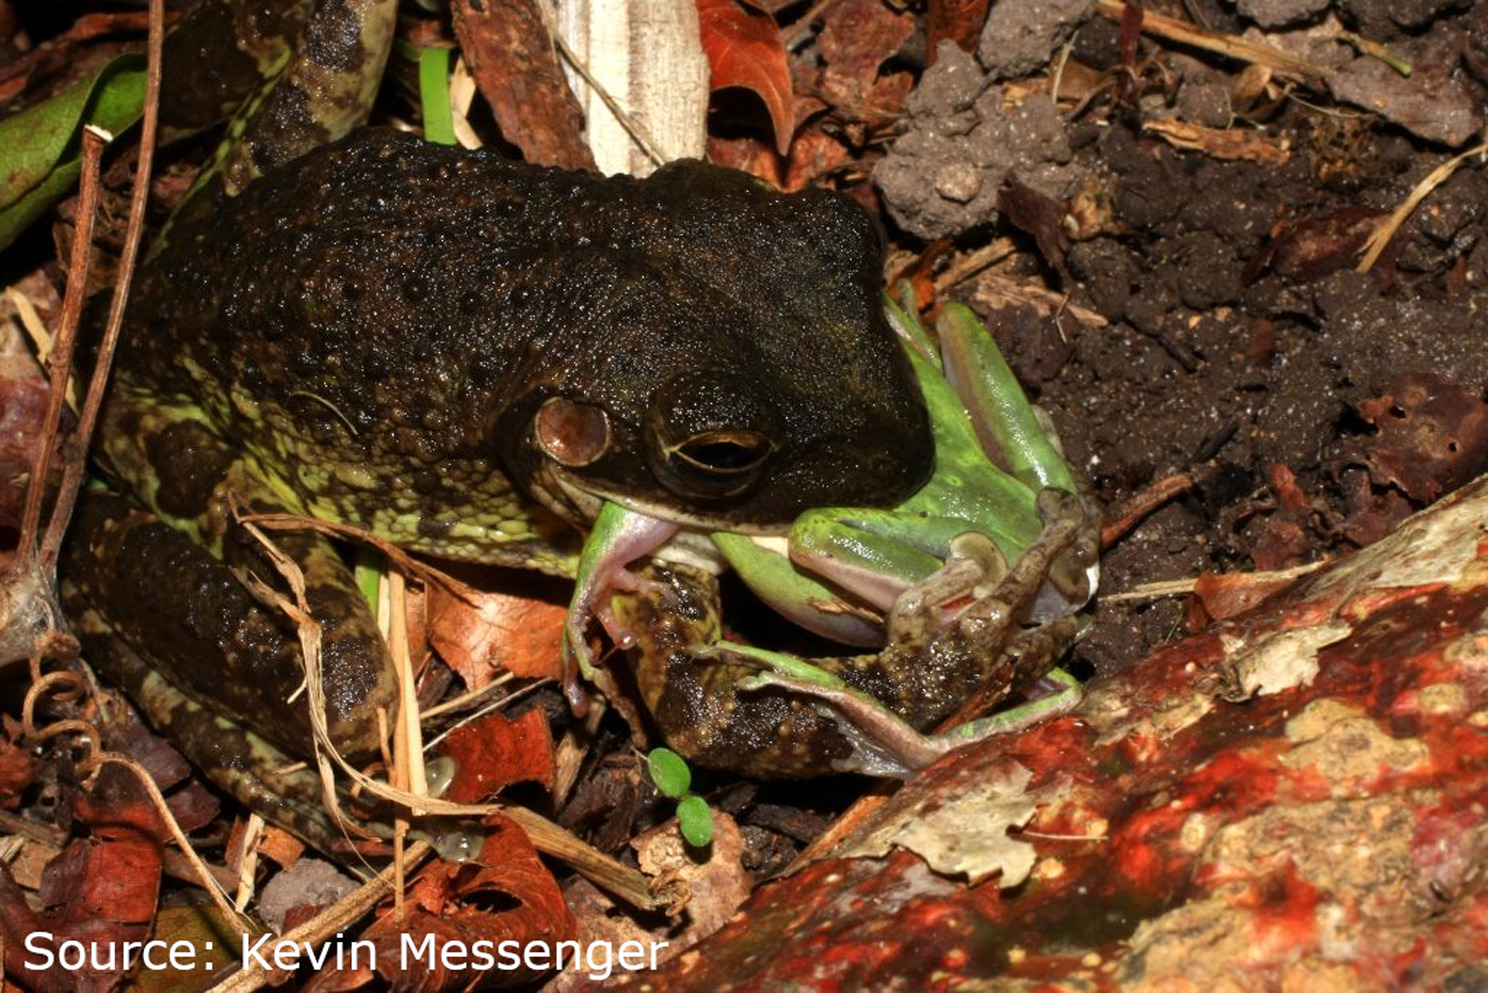 cuban tree frog eating native